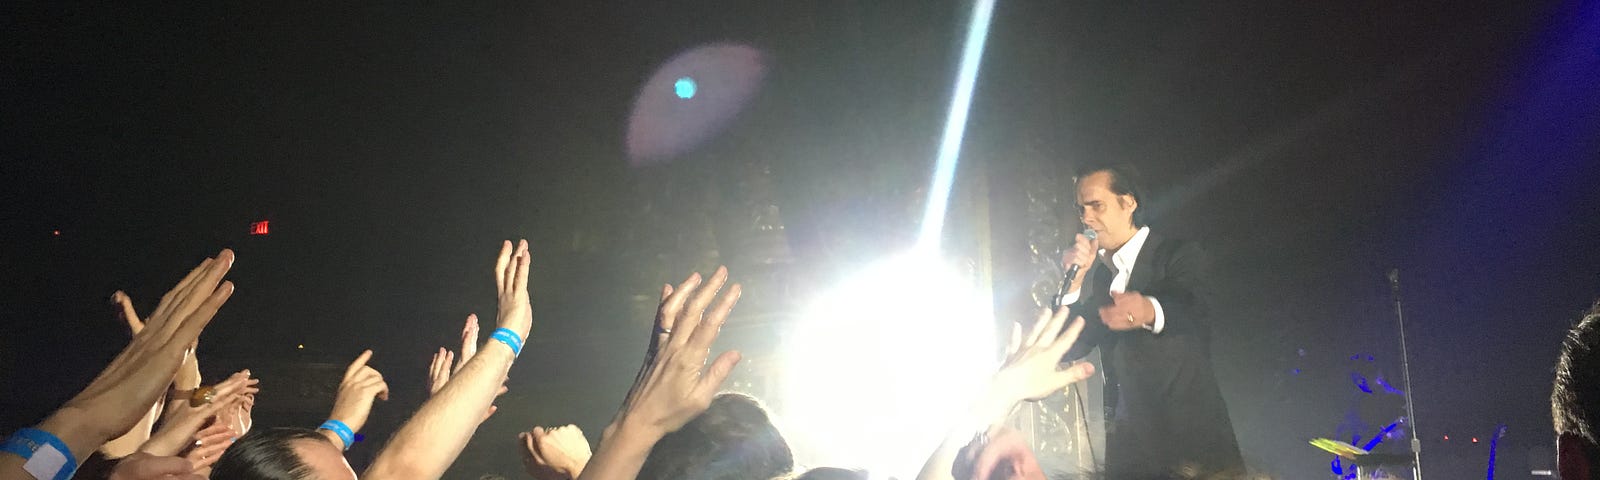 Nick Cave at a concert